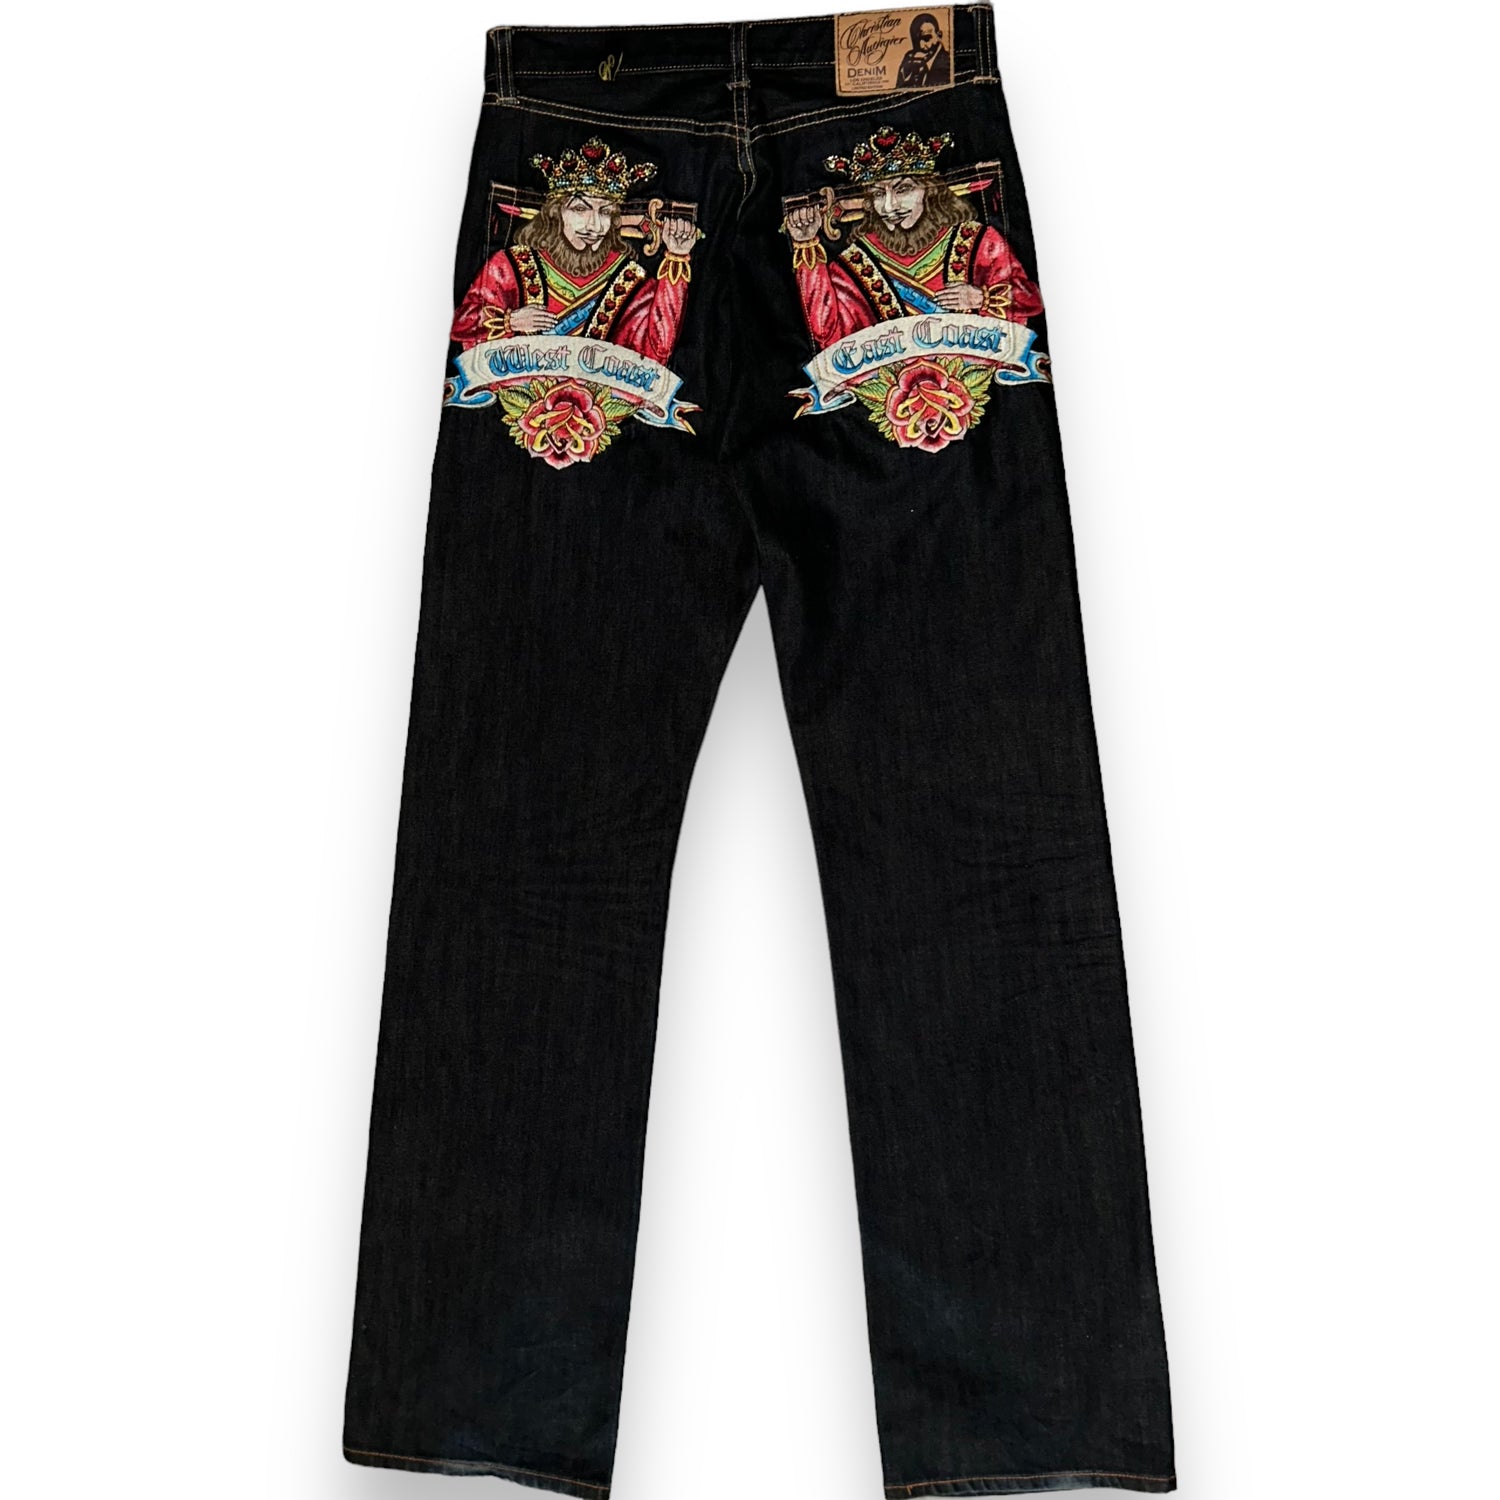 Baggy jeans Christian Audighier Ed Hardy  (30 USA  S)